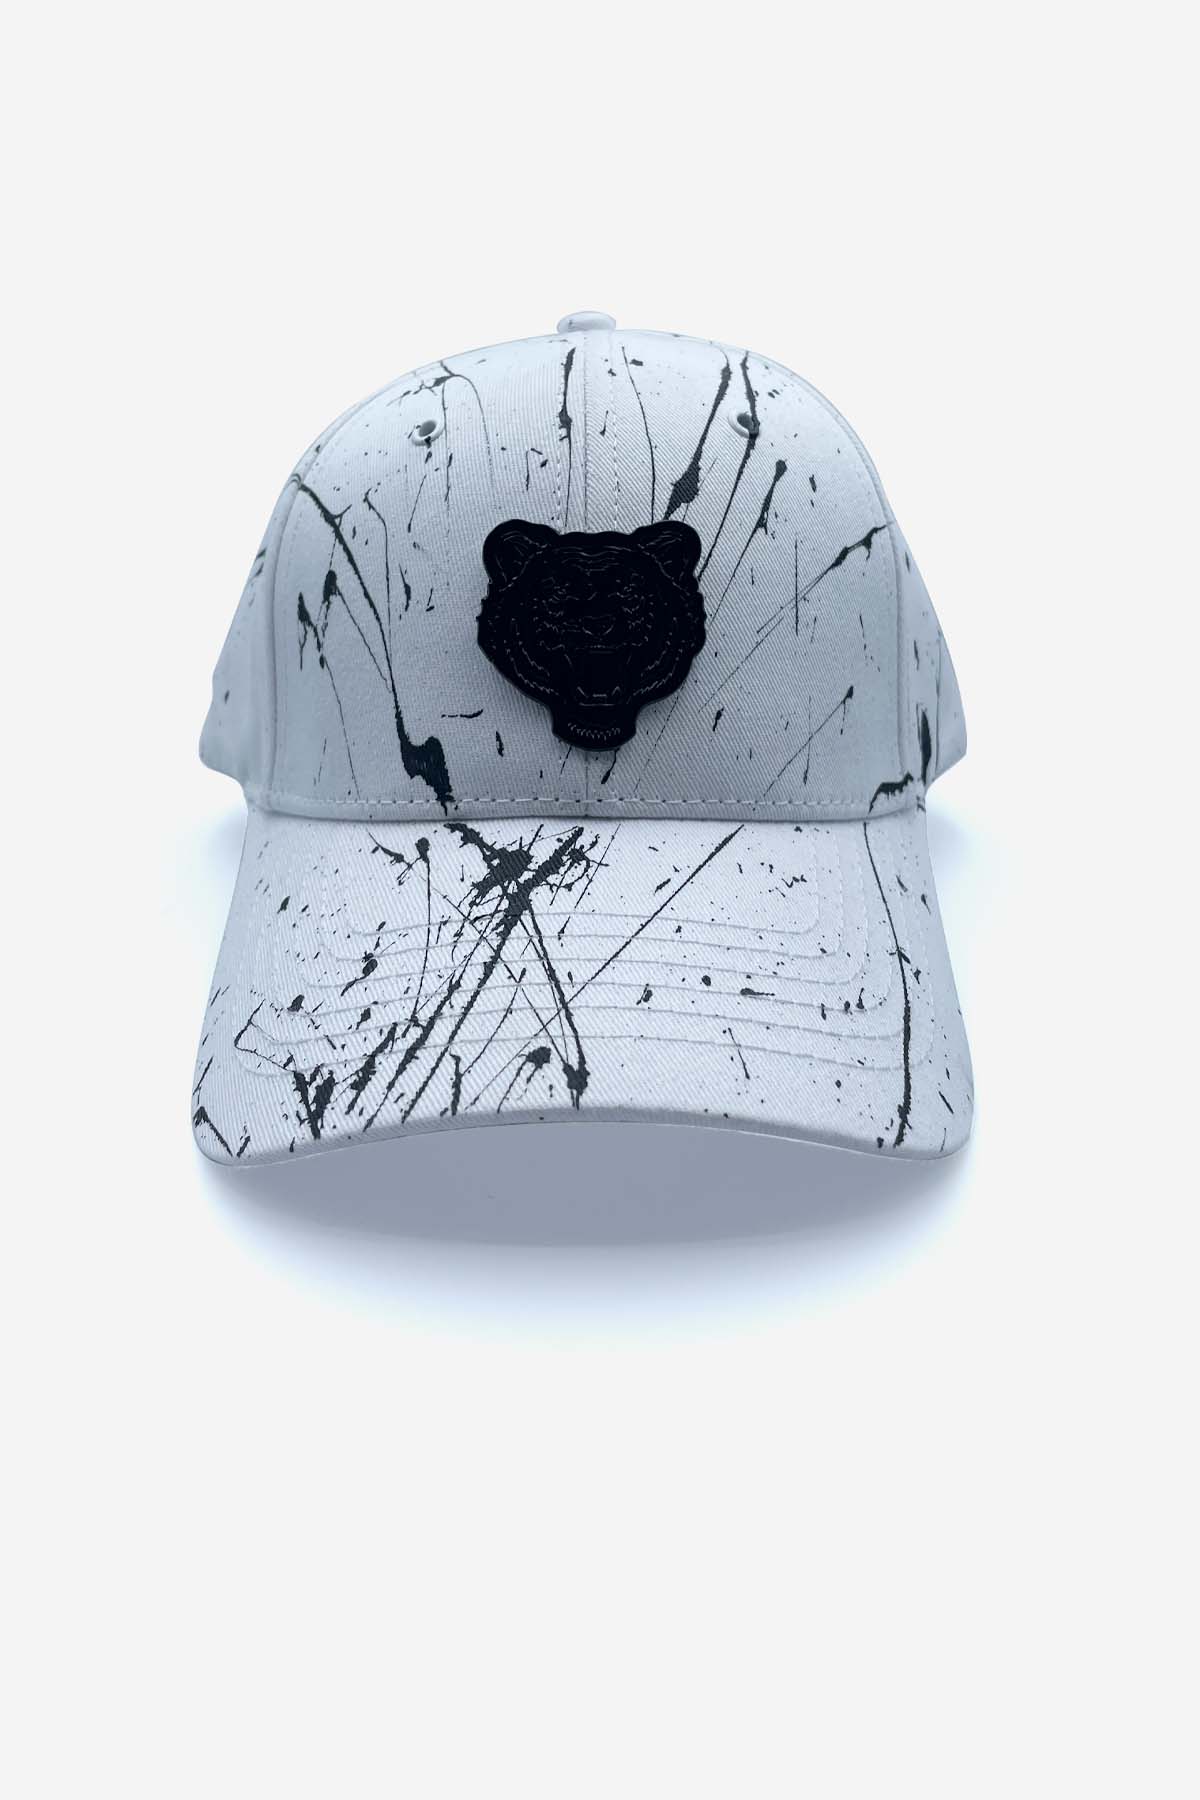 White cap with black paint